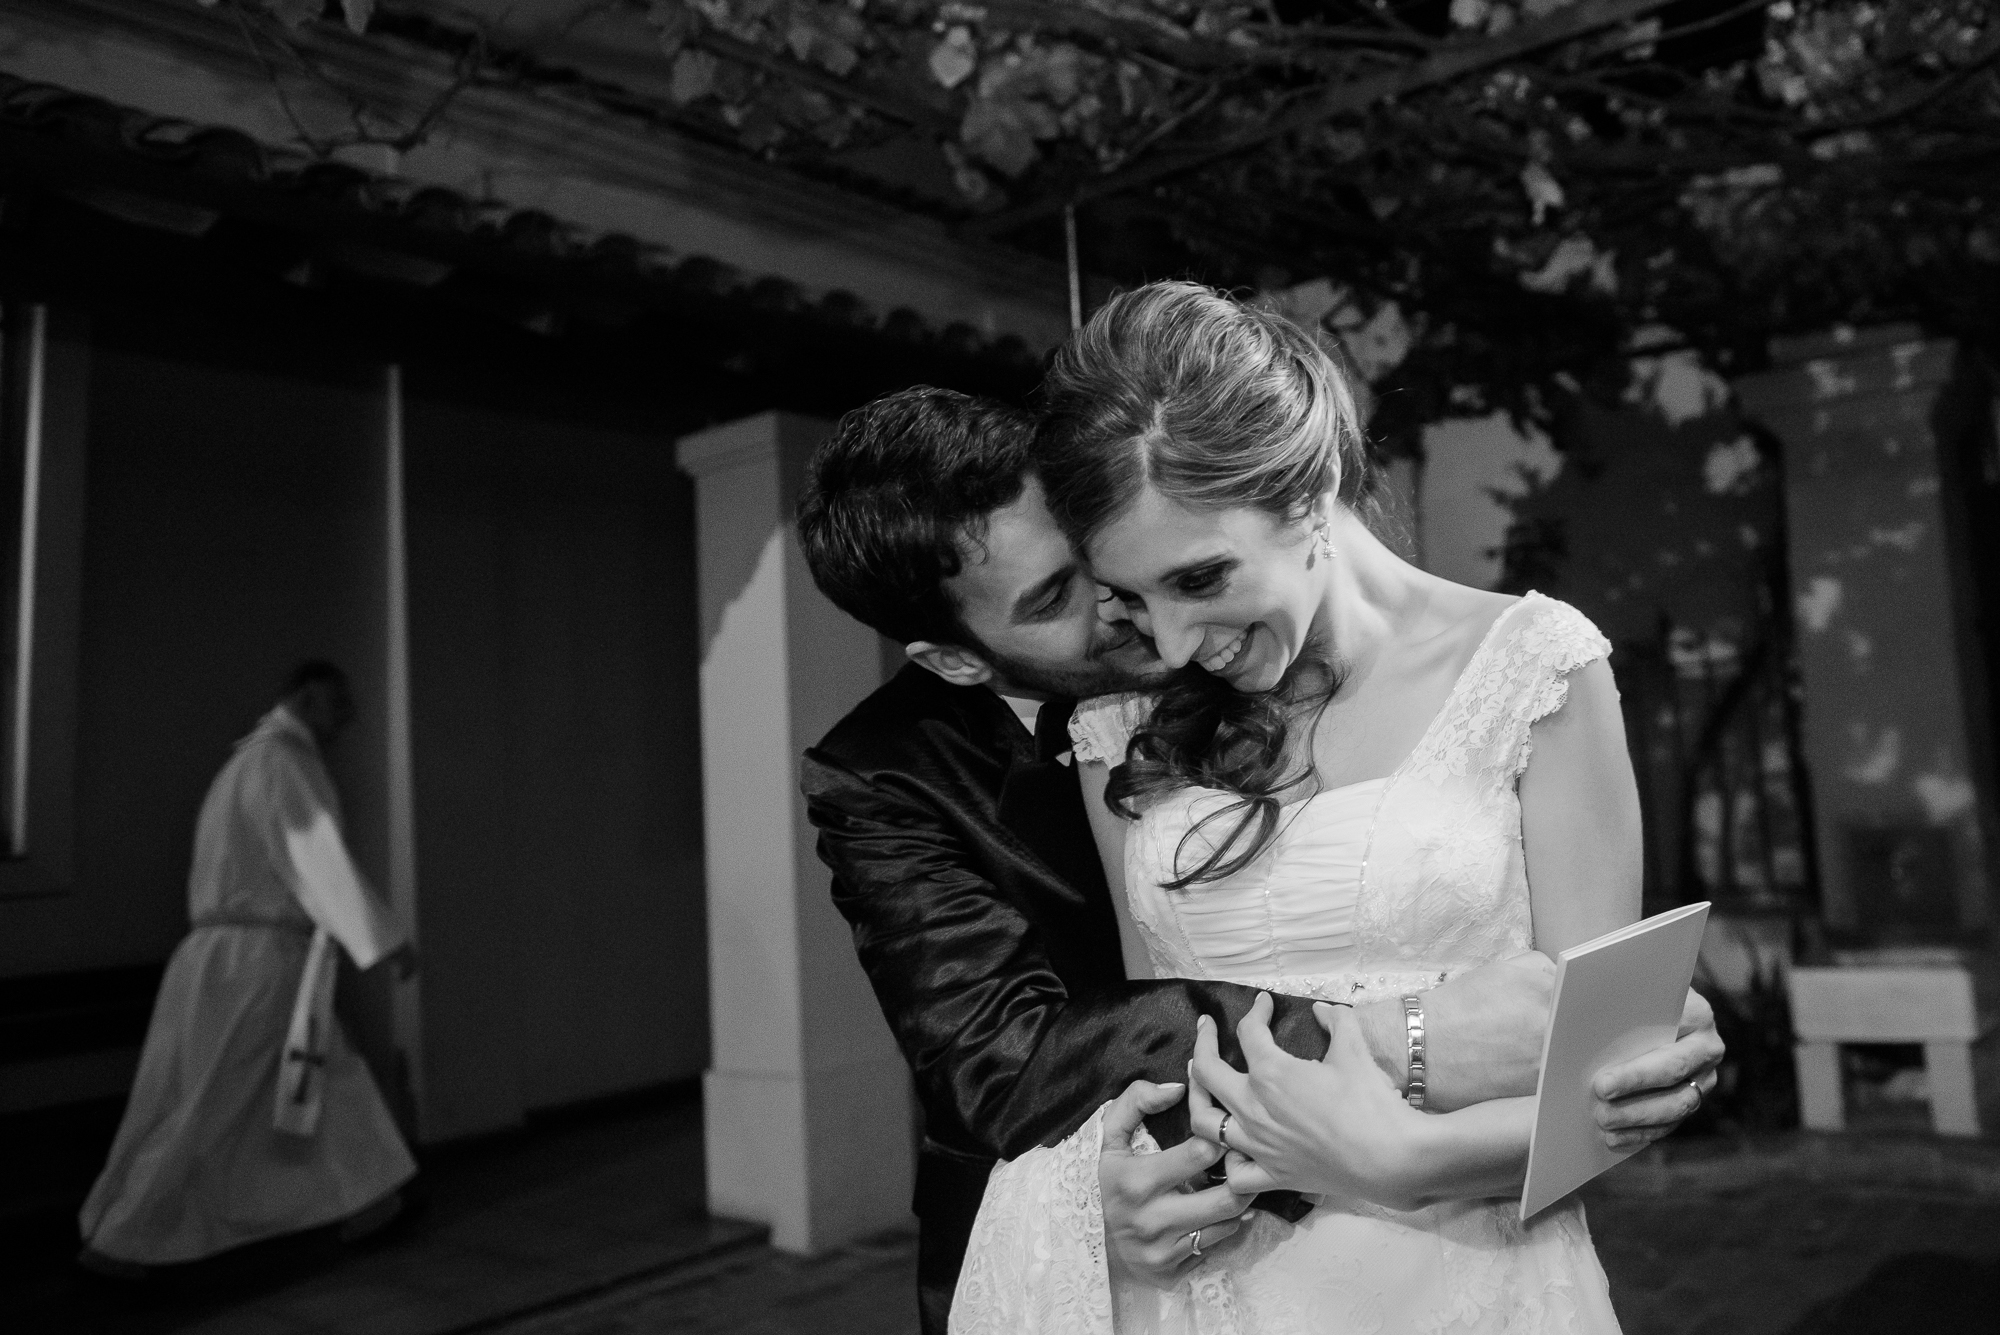 Gustavo Campos, Deck 39, Fotos espontaneas, fotografo de bodas, fotografo casamientos